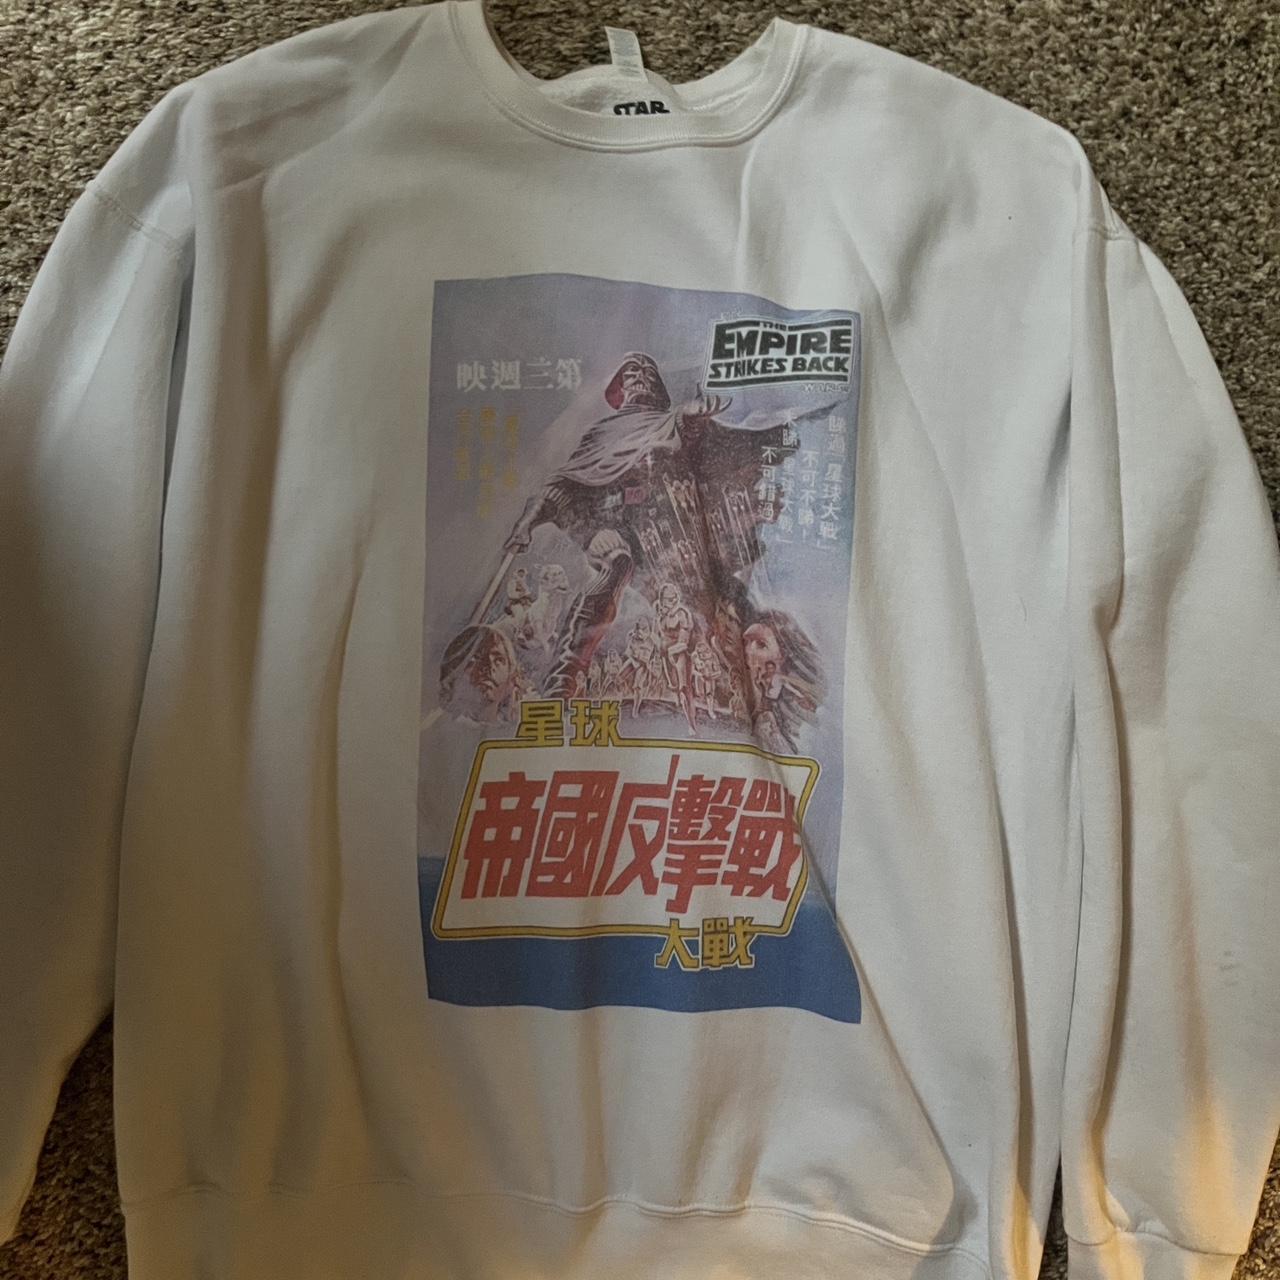 Star Wars Japanese Kanji Poster T-Shirt